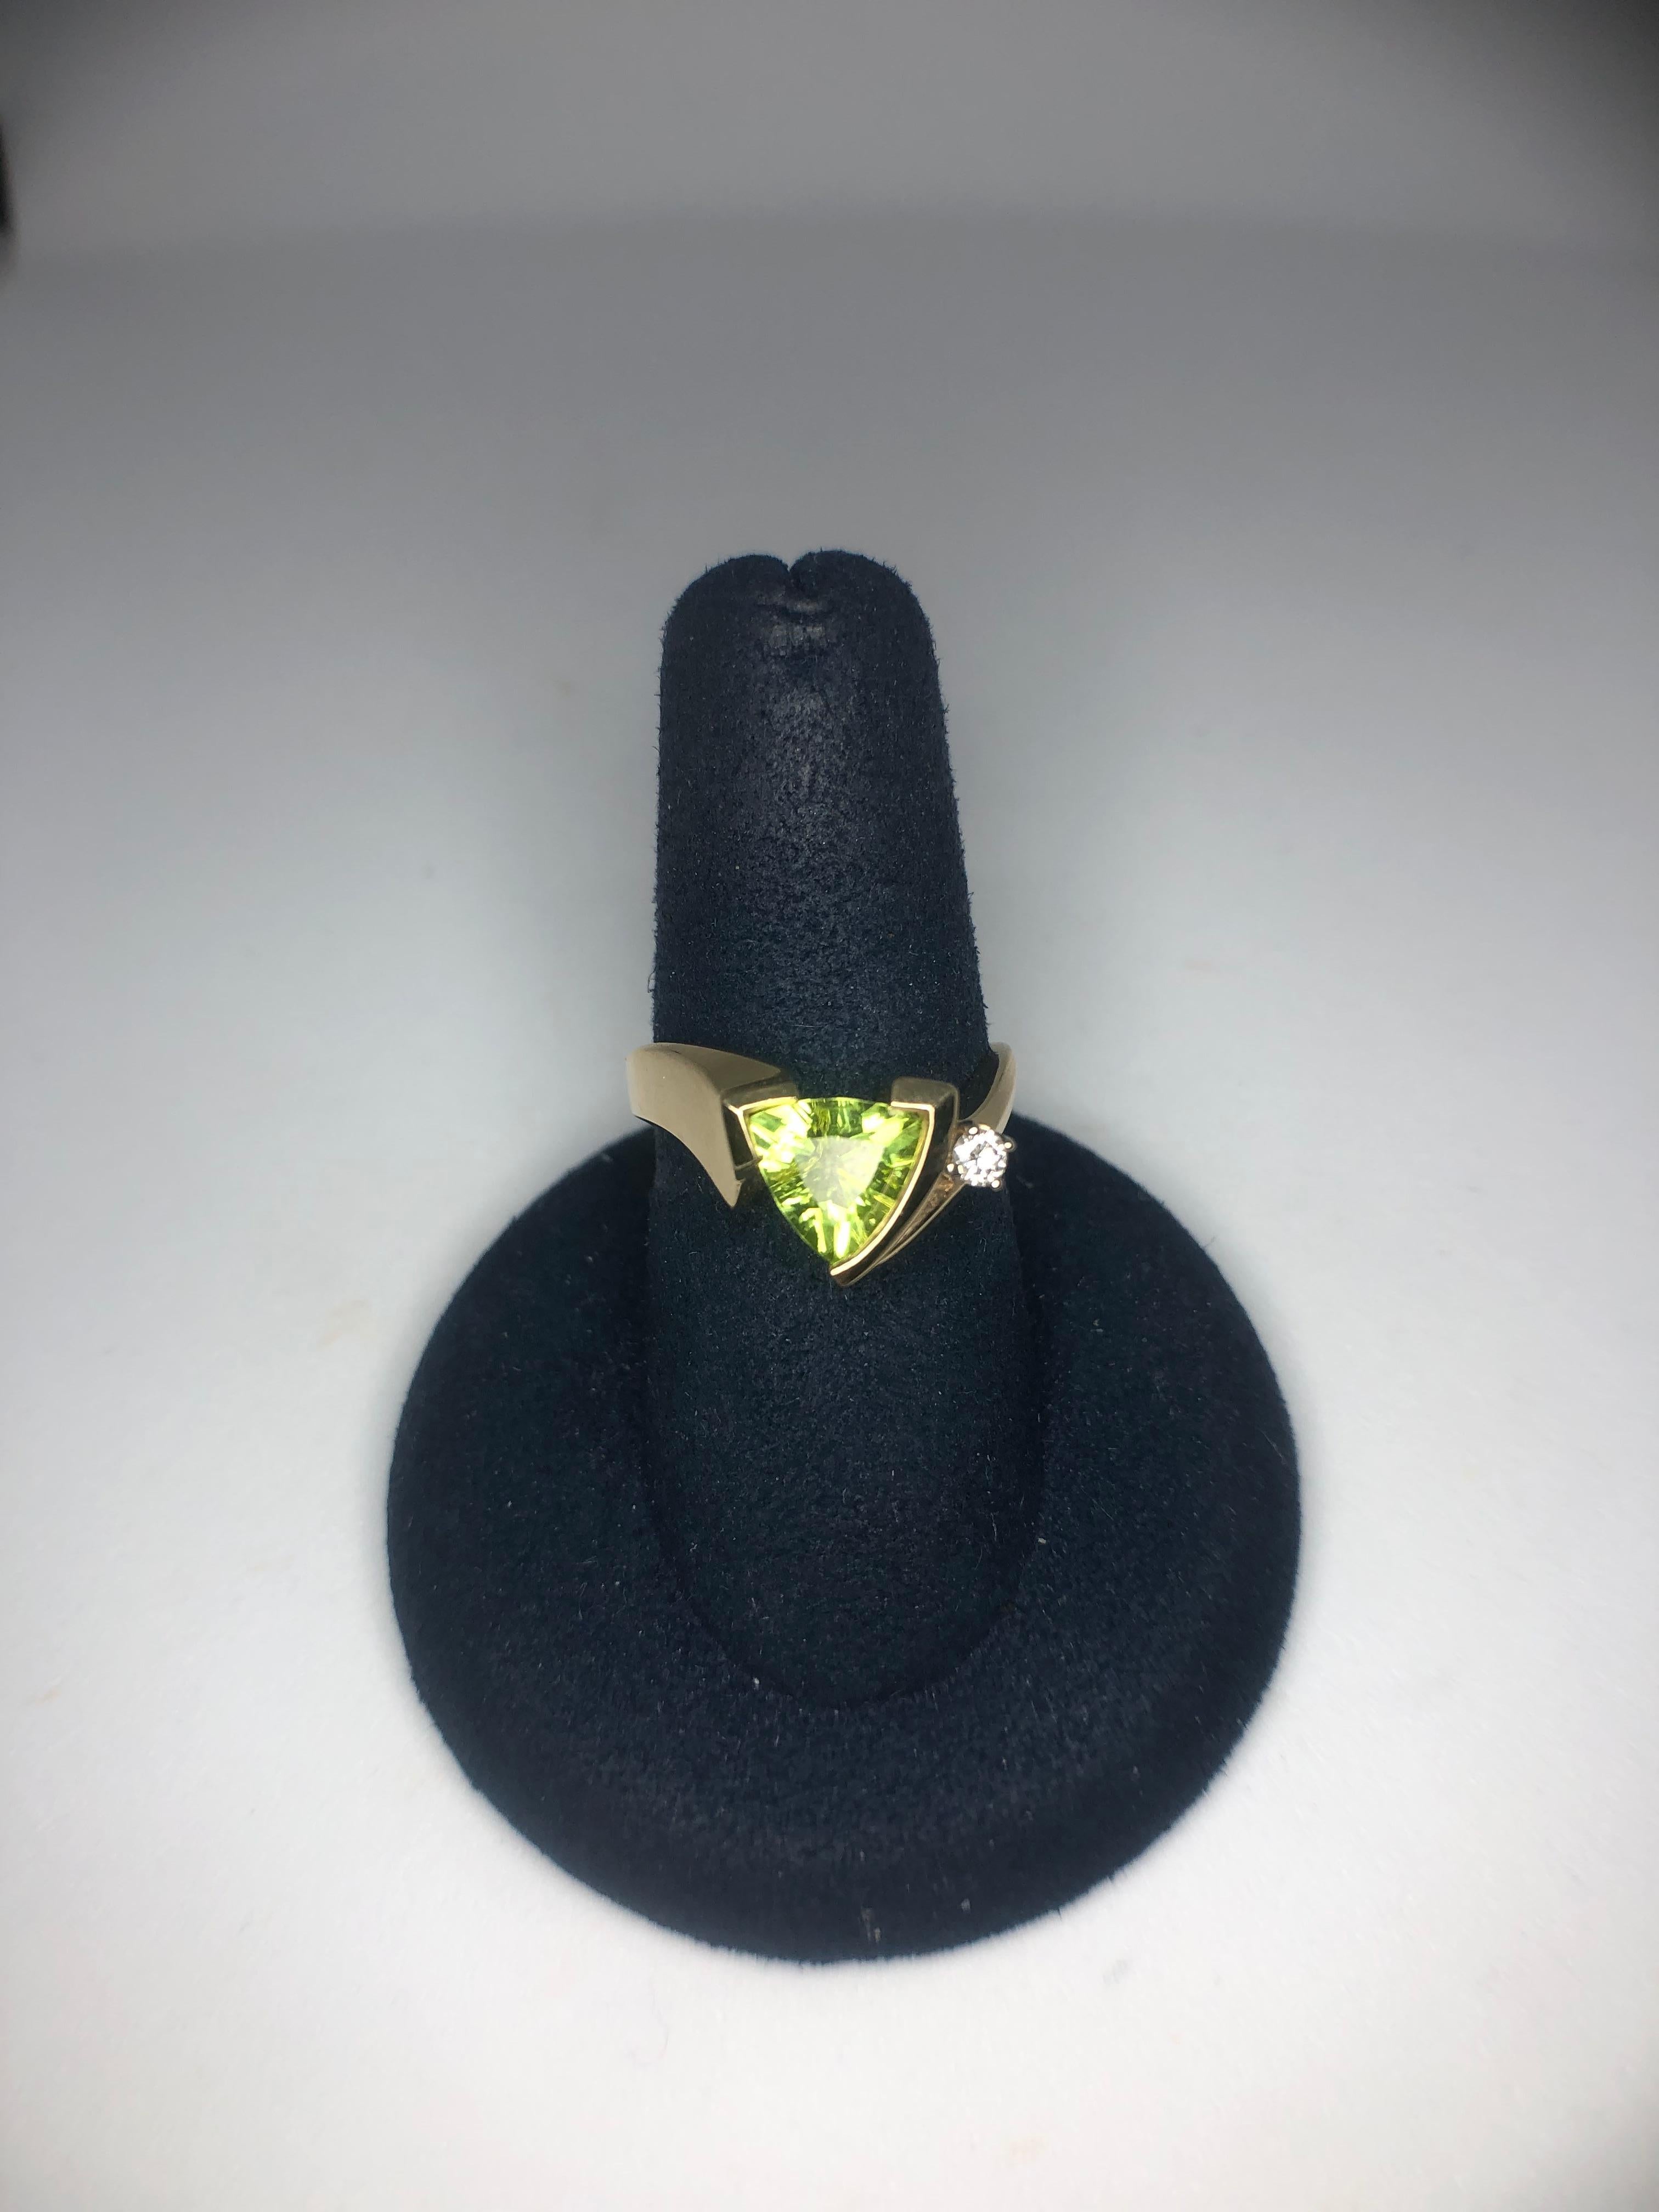 Lady's 14kt yellow gold trillion cut peridot and diamond ring by Aurum, 1 - trillion cut peridot = 1.25ct, 1 - diamond = .07ct. Style #A-125. Size 6.